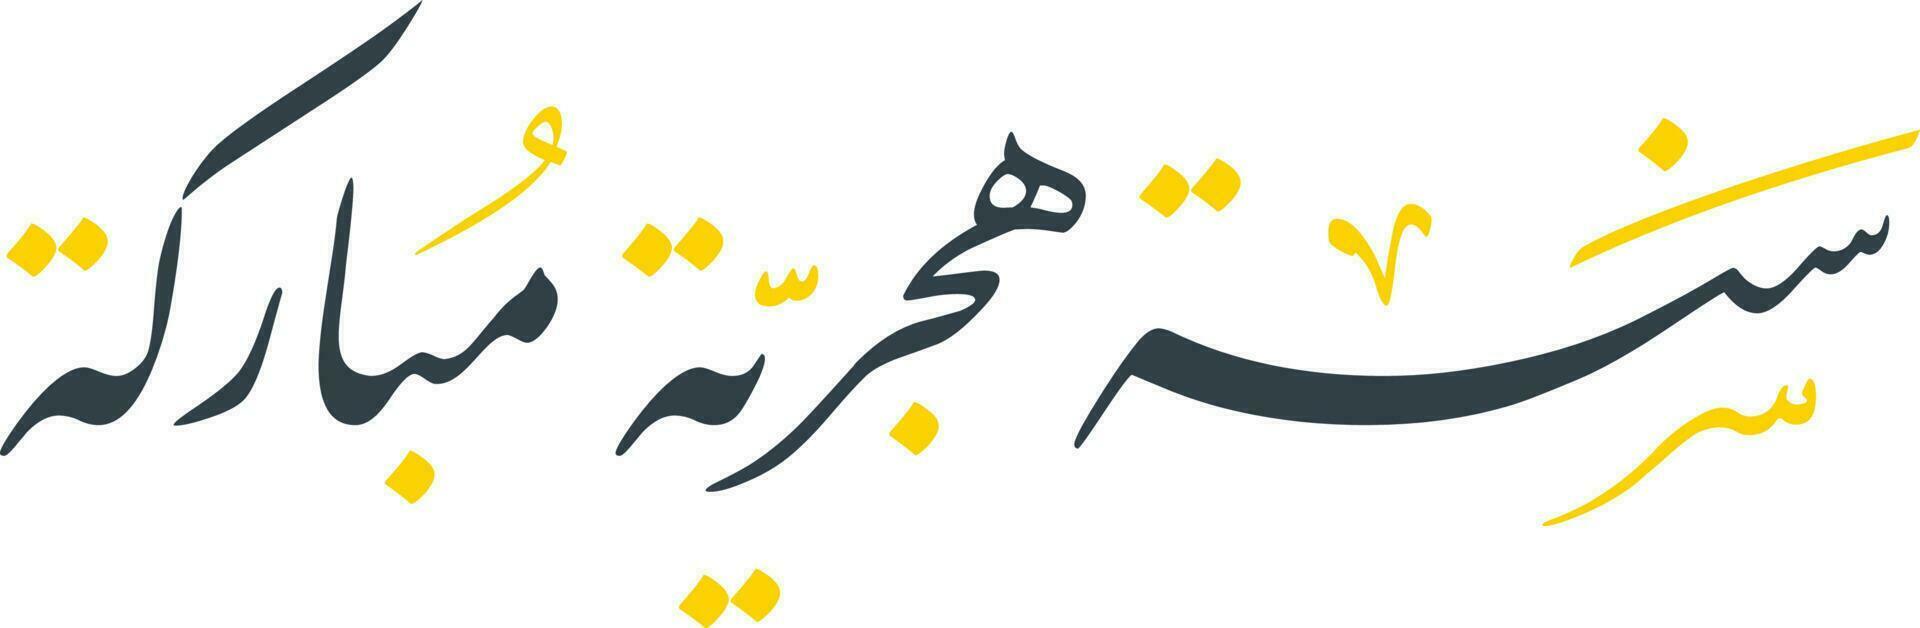 Hijri Year logo vector in Arabic calligraphy. Hijra Anniversary 1443